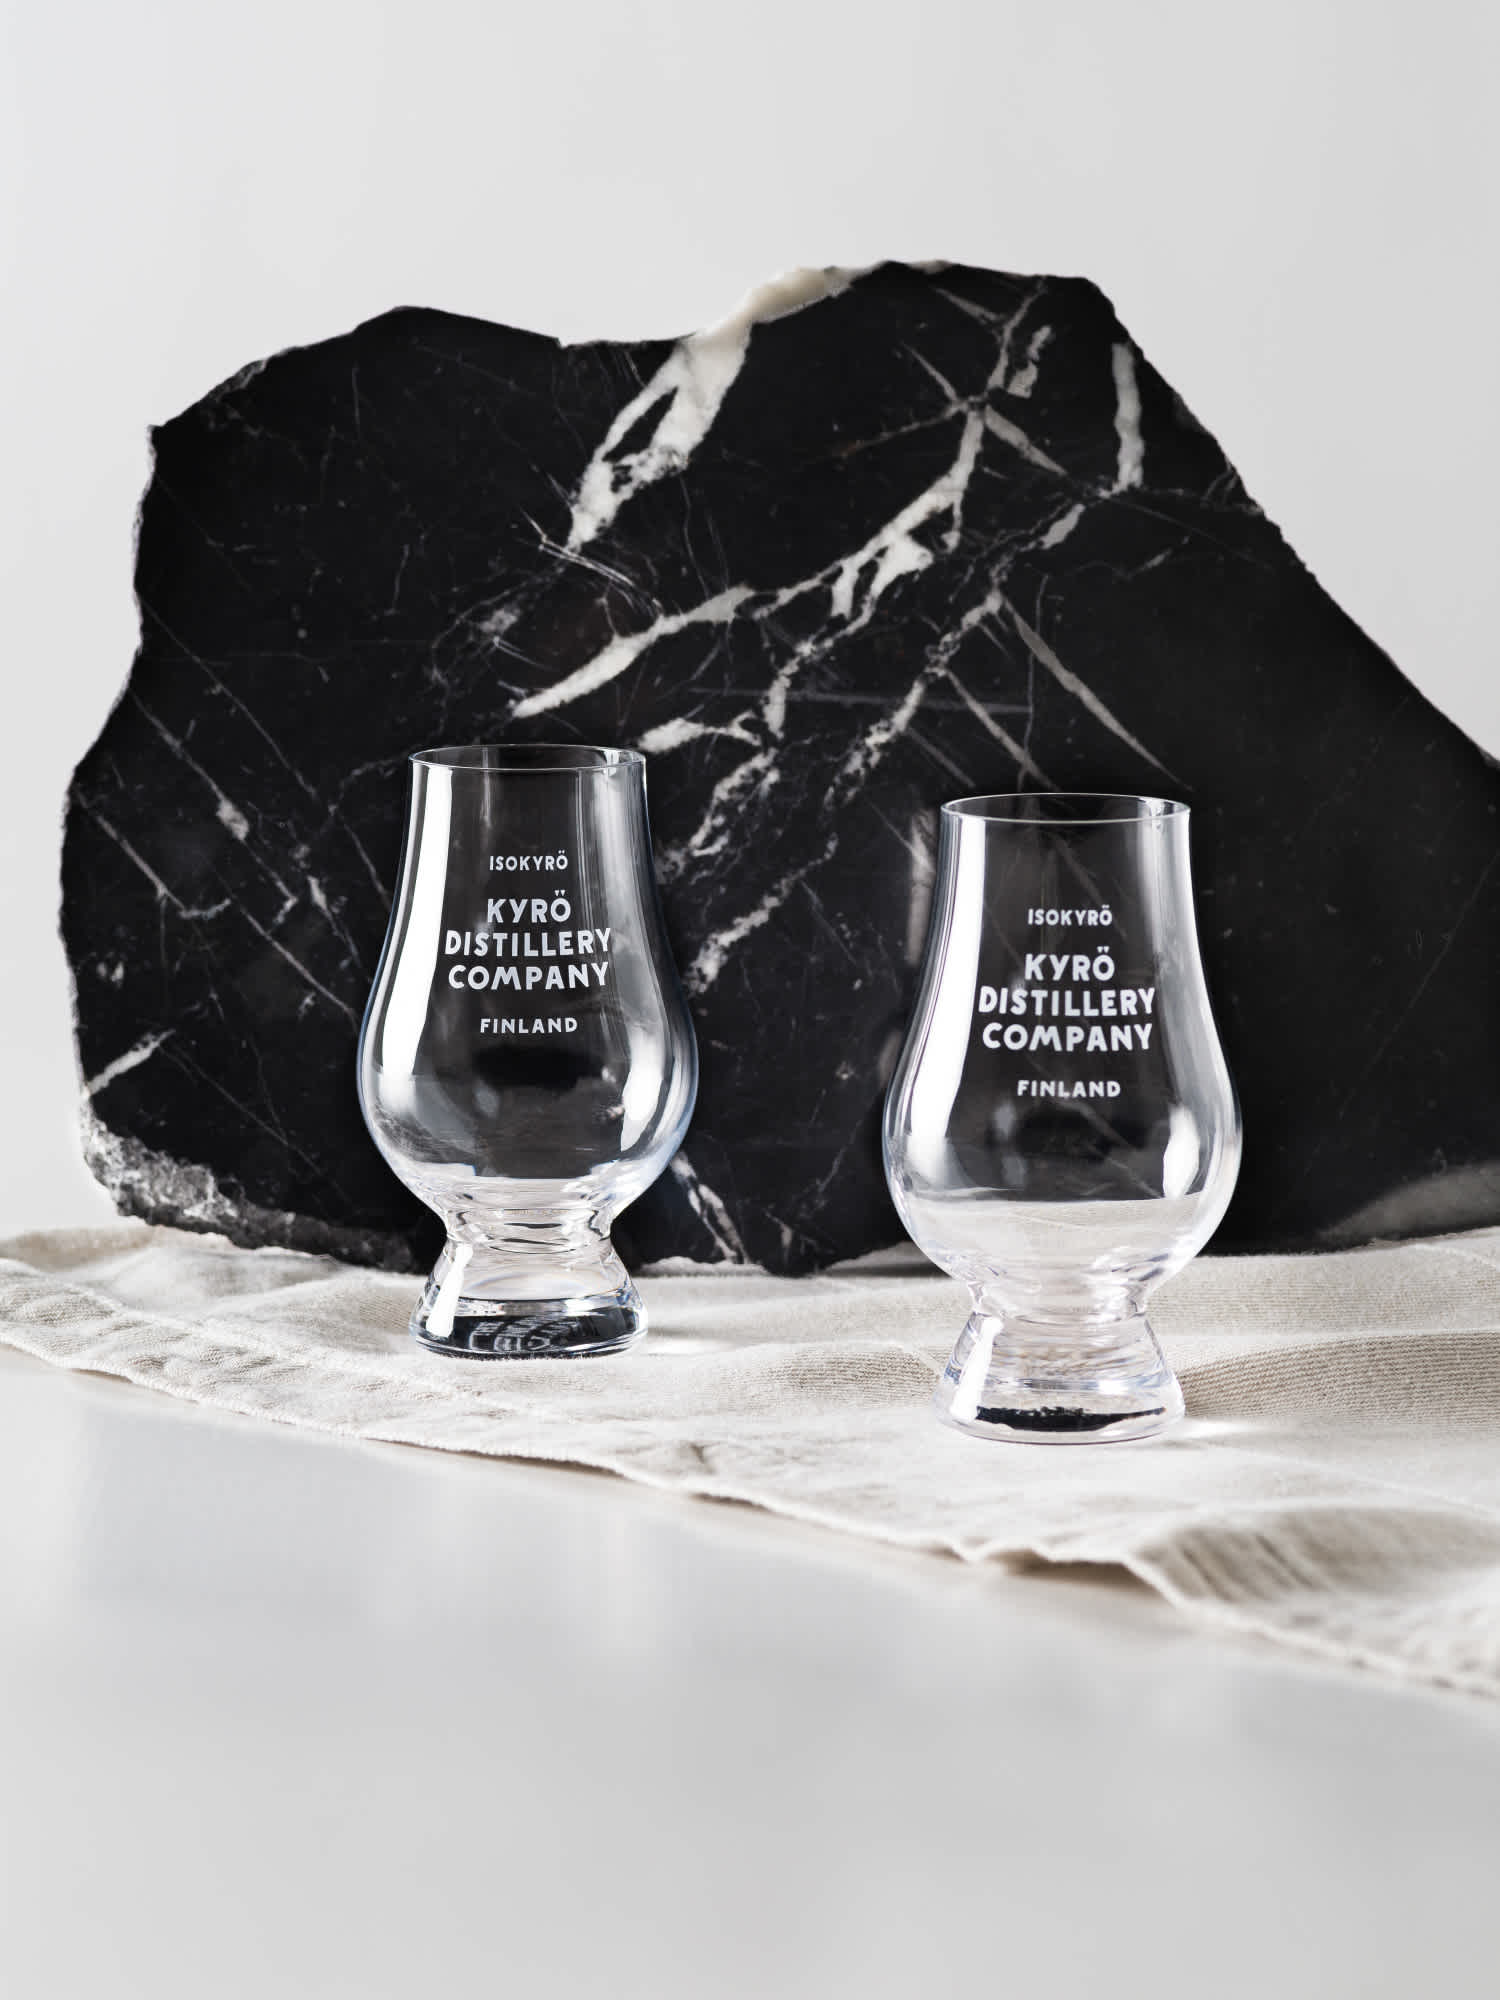 Two clear, Kyrö-branded Glencairn tasting glasses sat on top of natural colored linen and a black slab of granite. 